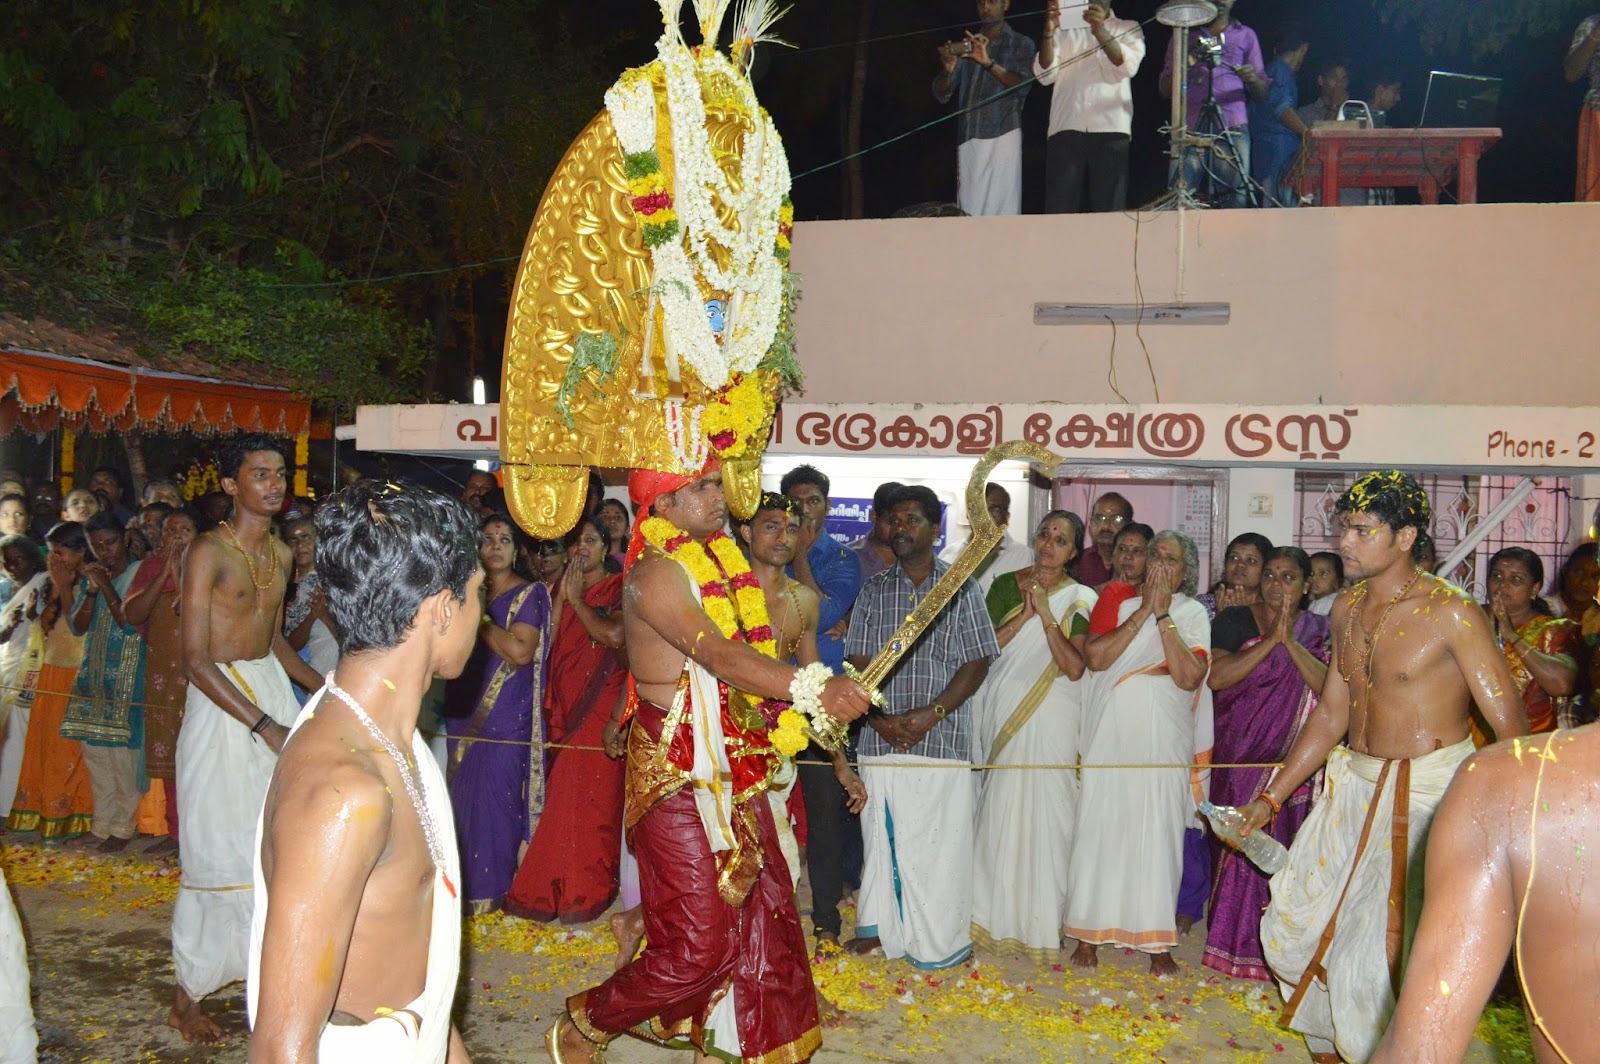 Pathiyanadu Sree Bhadrakali Temple Prayers and offerings made